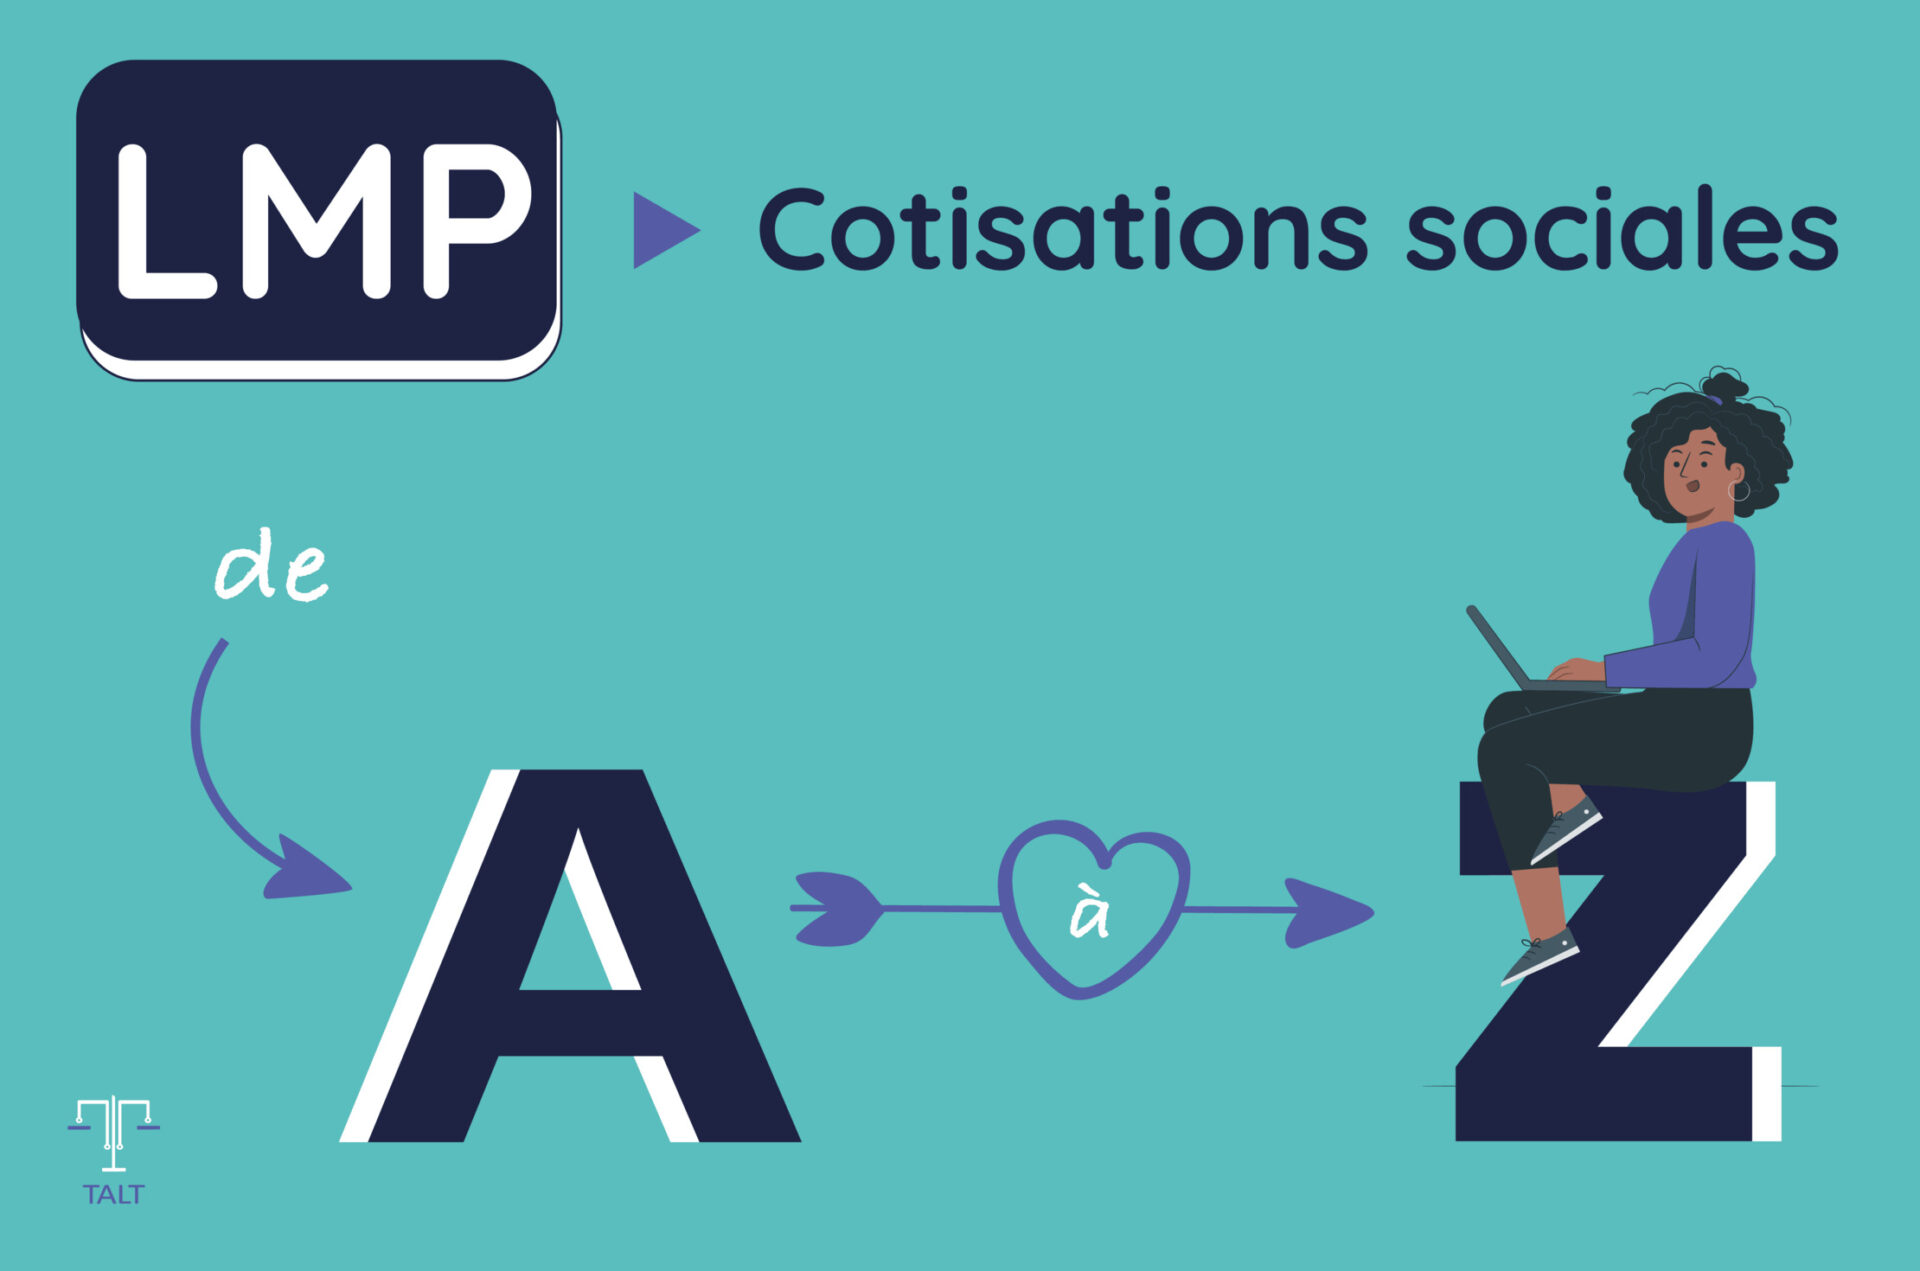 LMP Cotisations sociales